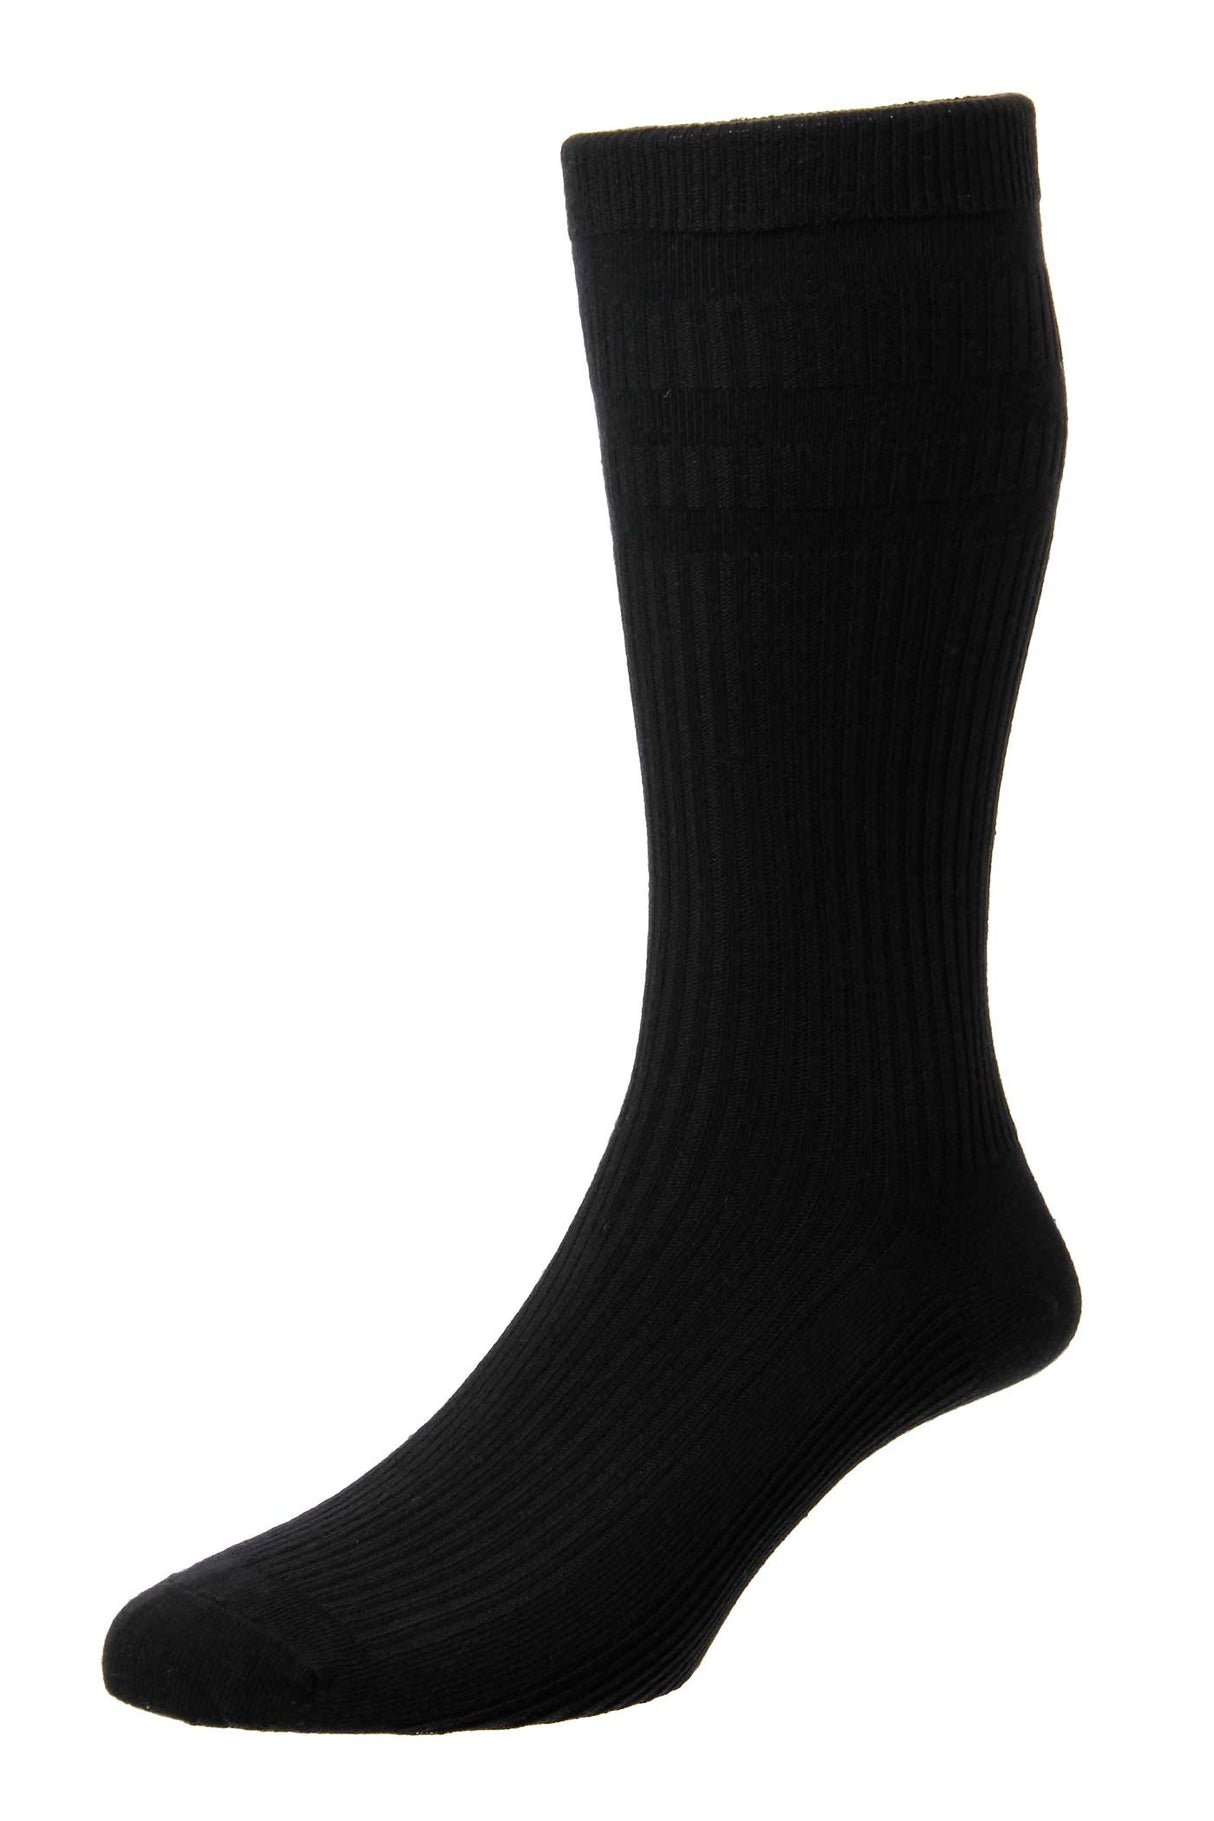 H.J. Hall Soft Top Black Socks Black